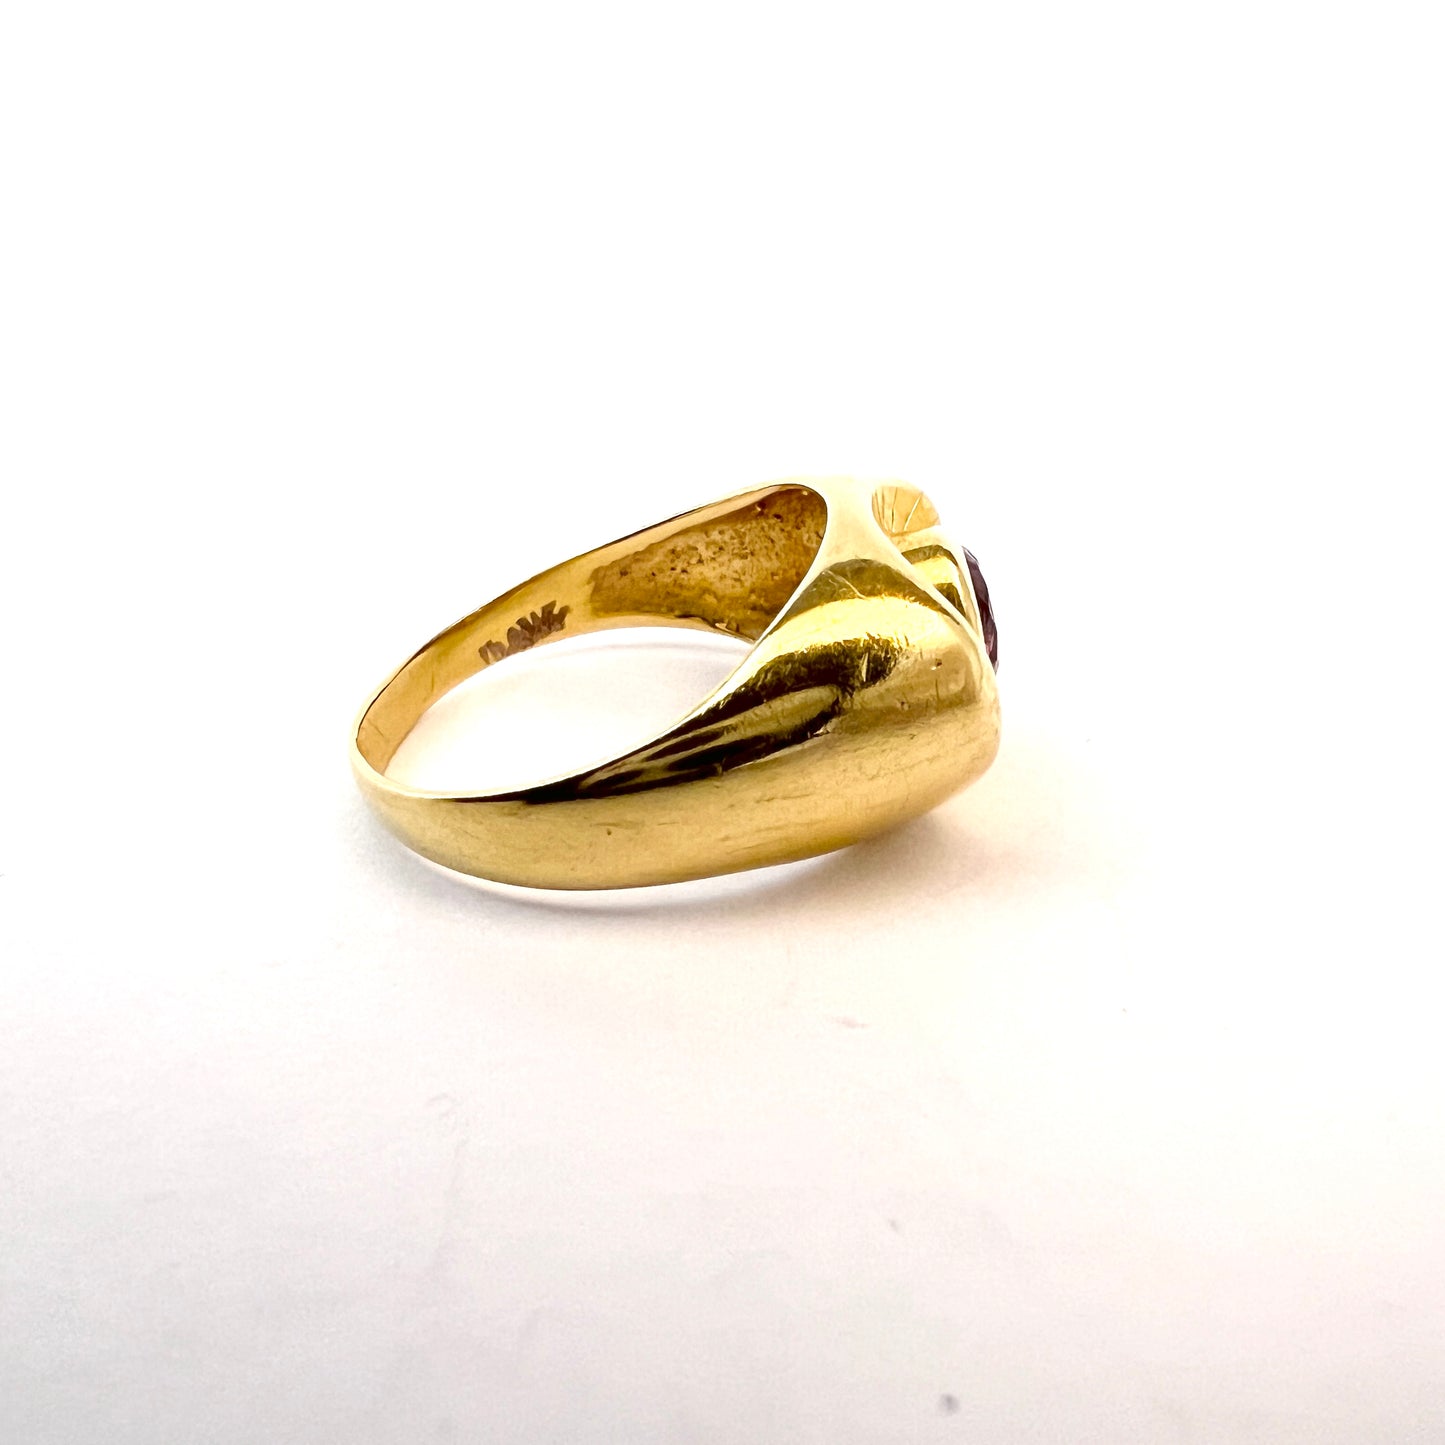 Vintage 1950s Mid-Century Modern 18k Gold Amethyst Ring.